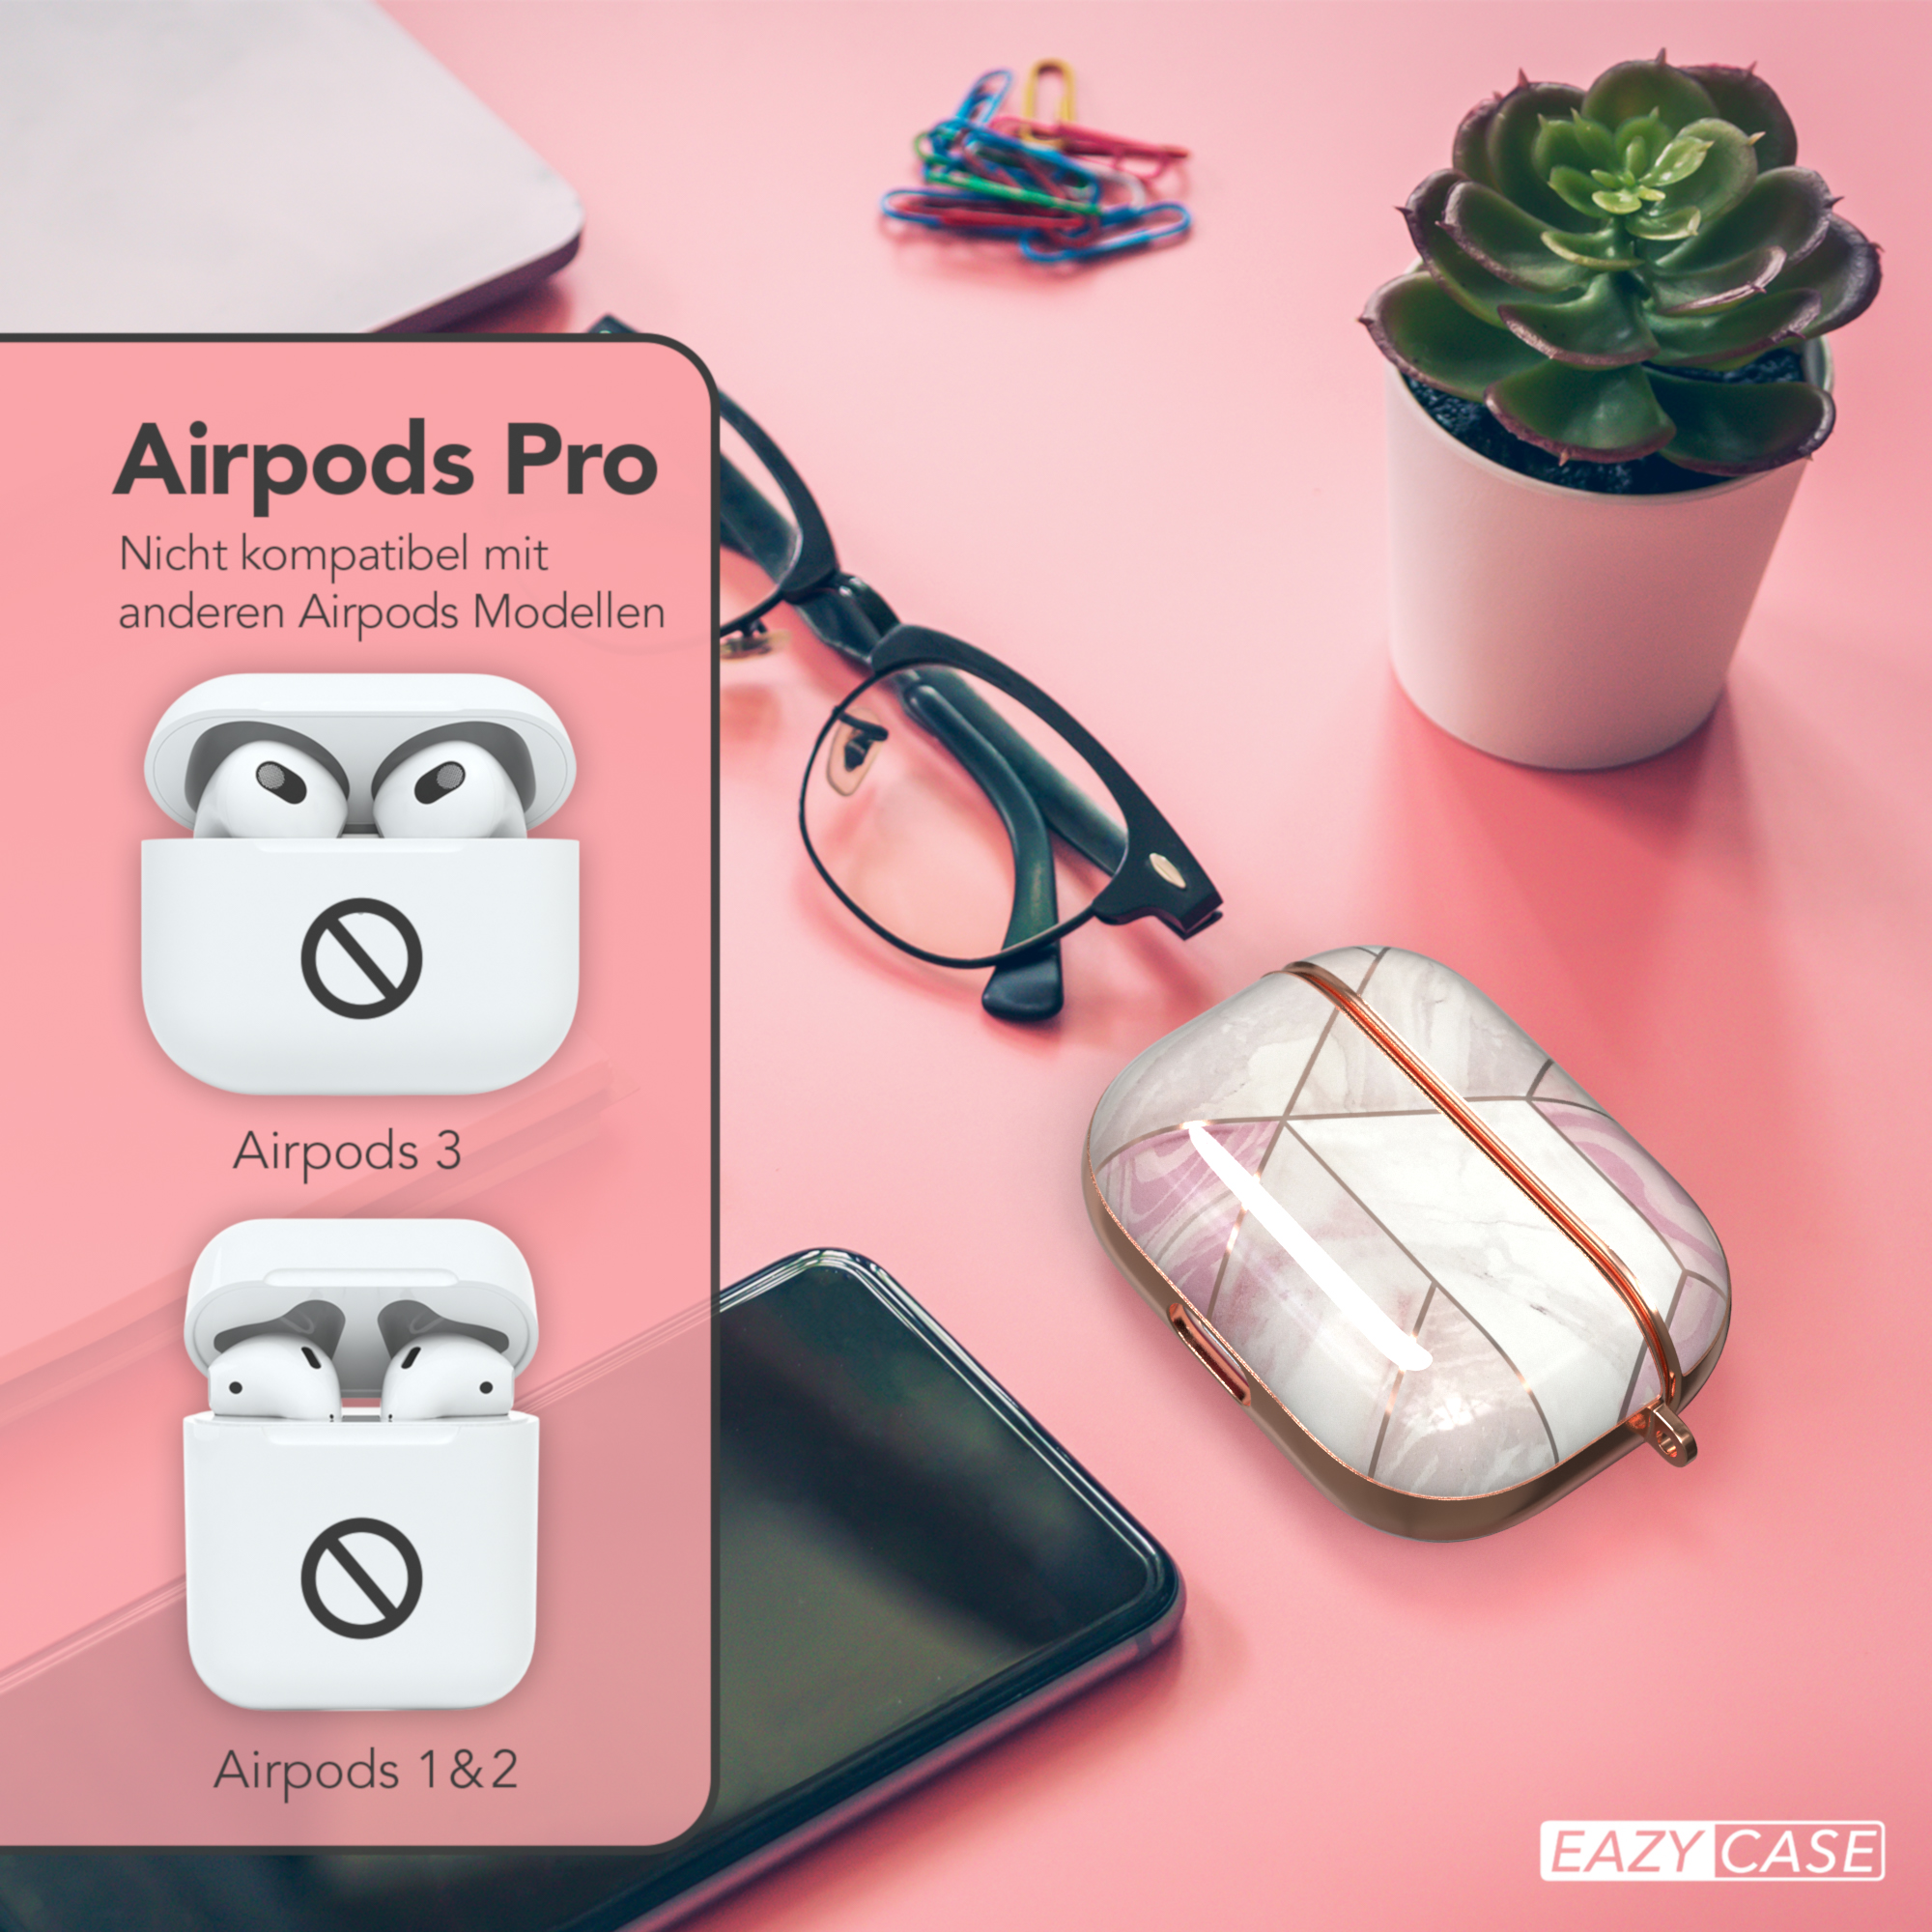 EAZY CASE Pro passend Case Sleeve Rosa Roségold Schutzhülle / AirPods für: IMD Apple Motiv